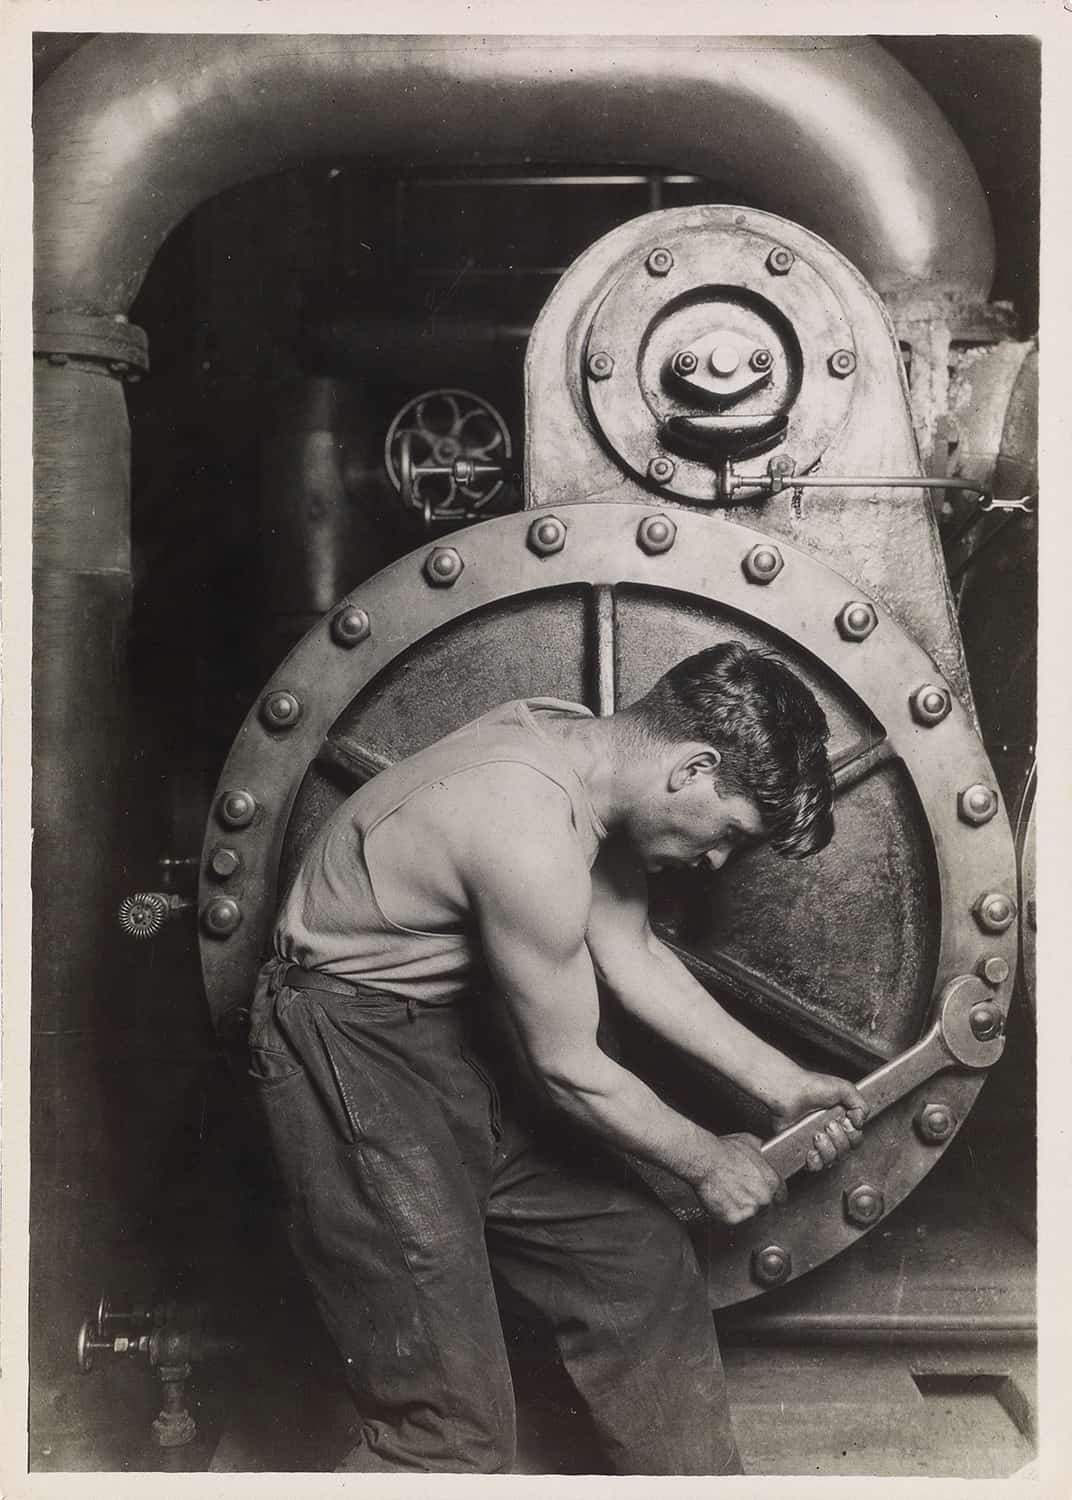 Lewis Hine - Power house mechanic working on steam pump